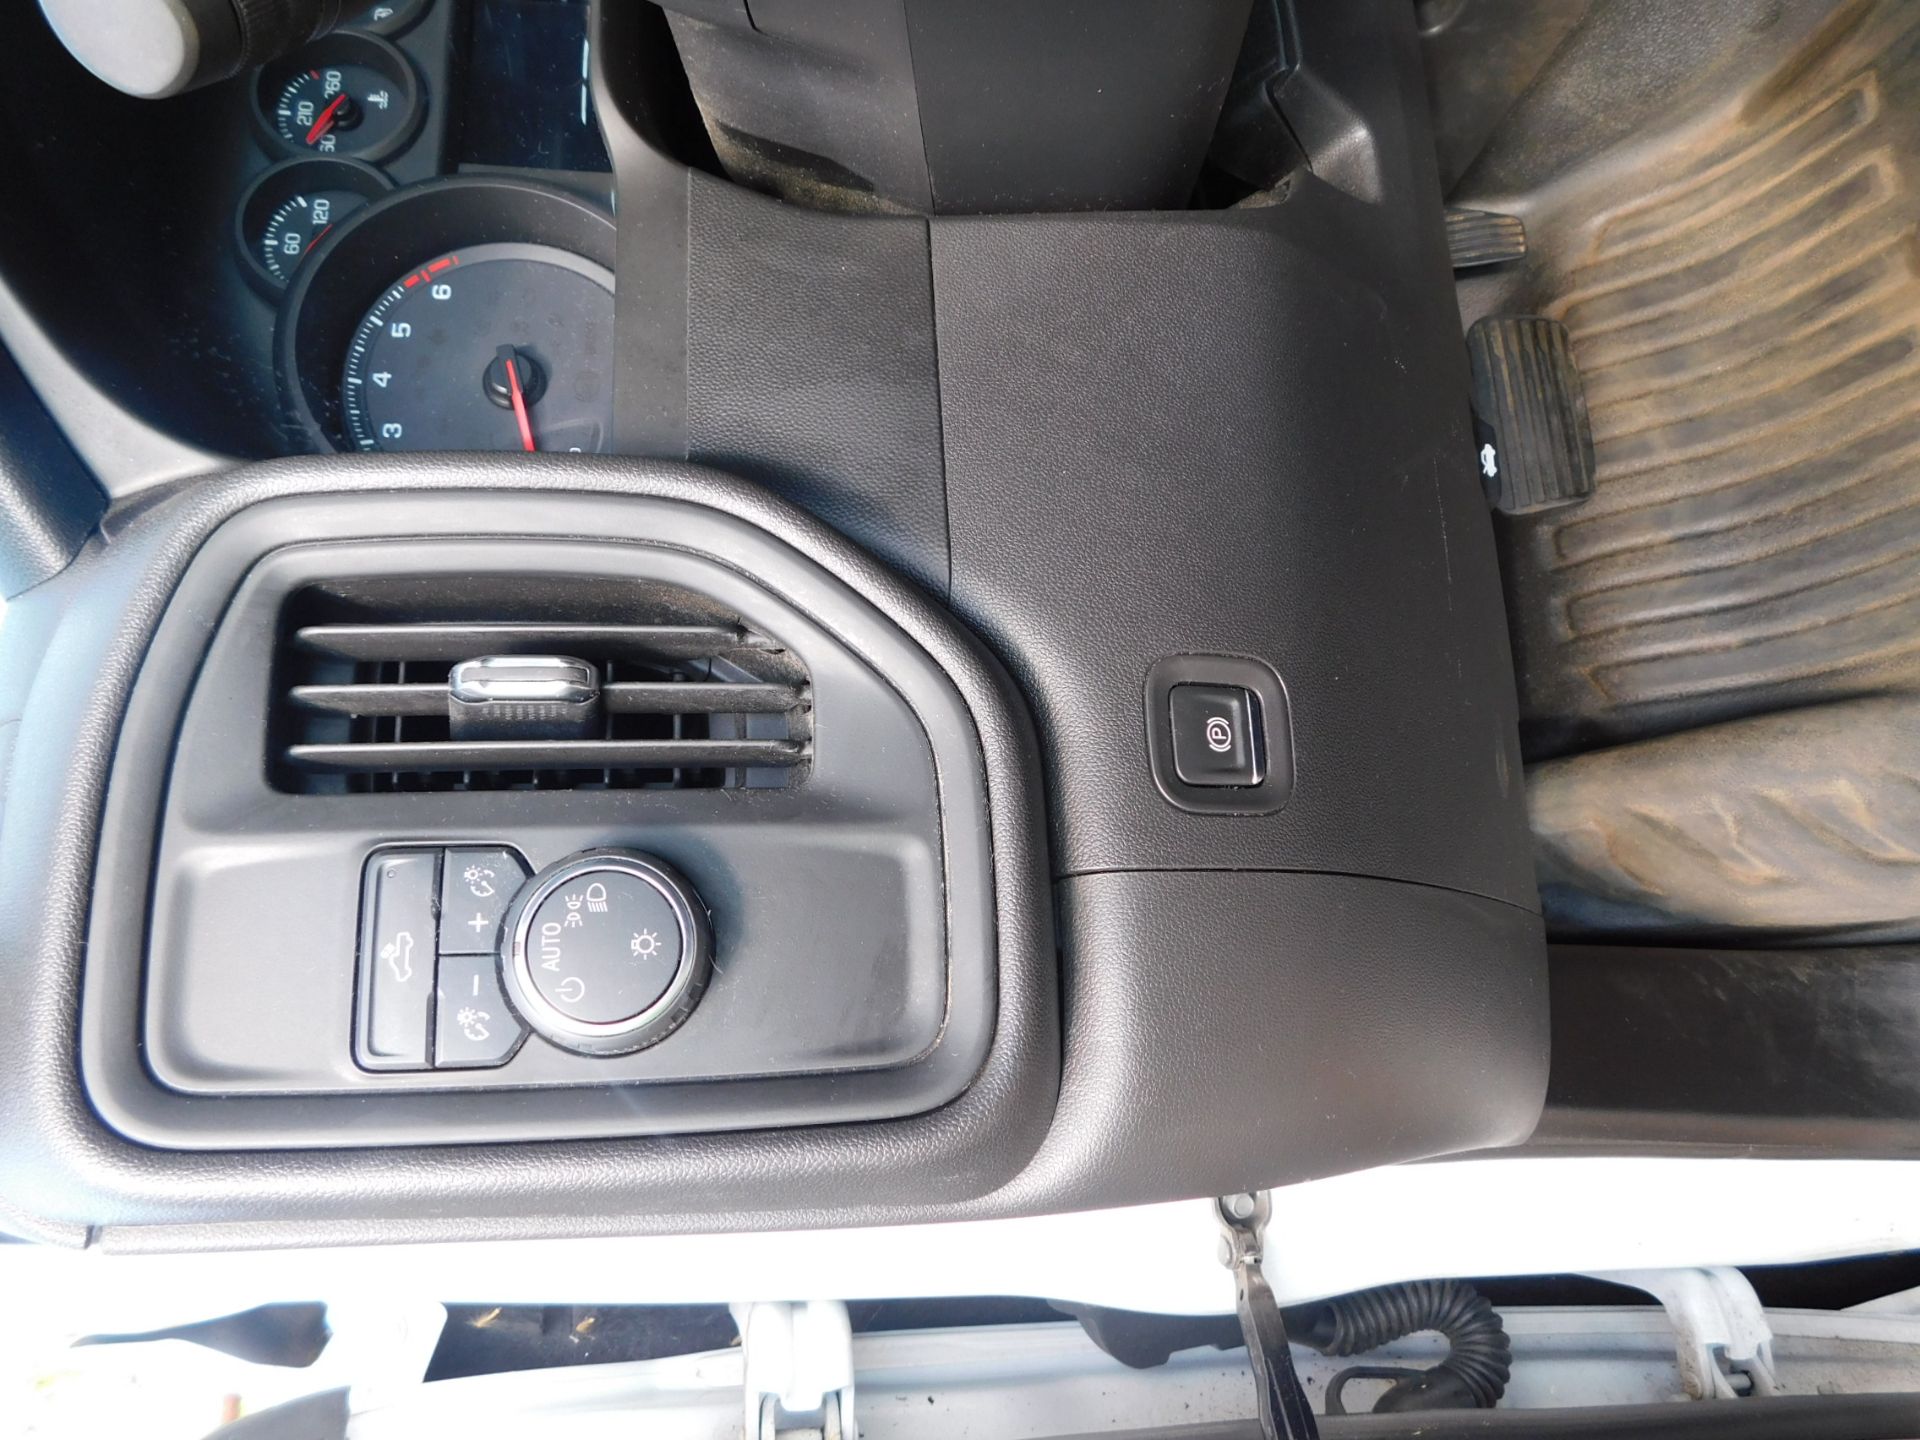 2019 Chevrolet Silverado Model 1500 Pick-Up Truck, VIN 3GCNWAEF2KG233058, Regular Cab, Auto, 8’ Bed, - Image 19 of 29